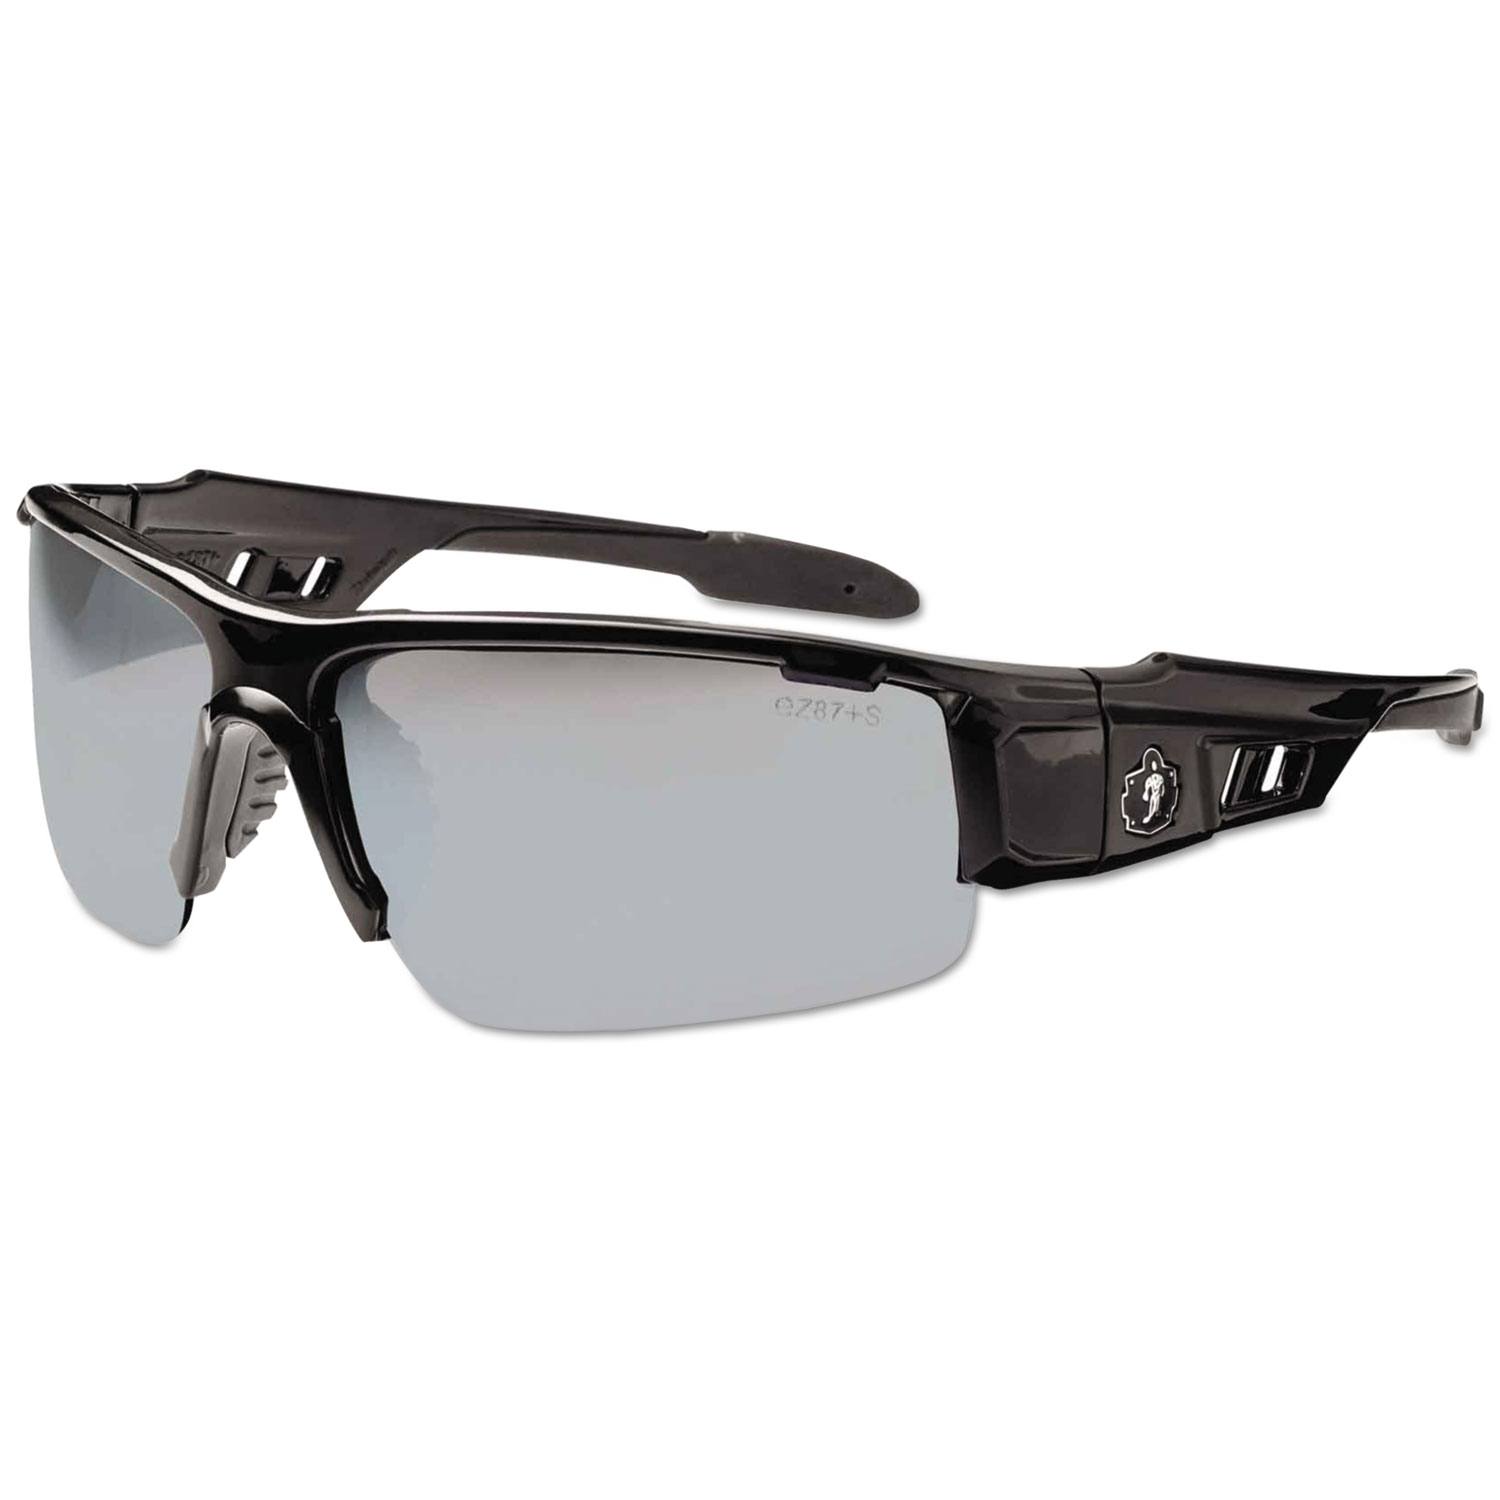 Skullerz Dagr Safety Glasses, Black Frame/Silver Lens, Nylon/Polycarb